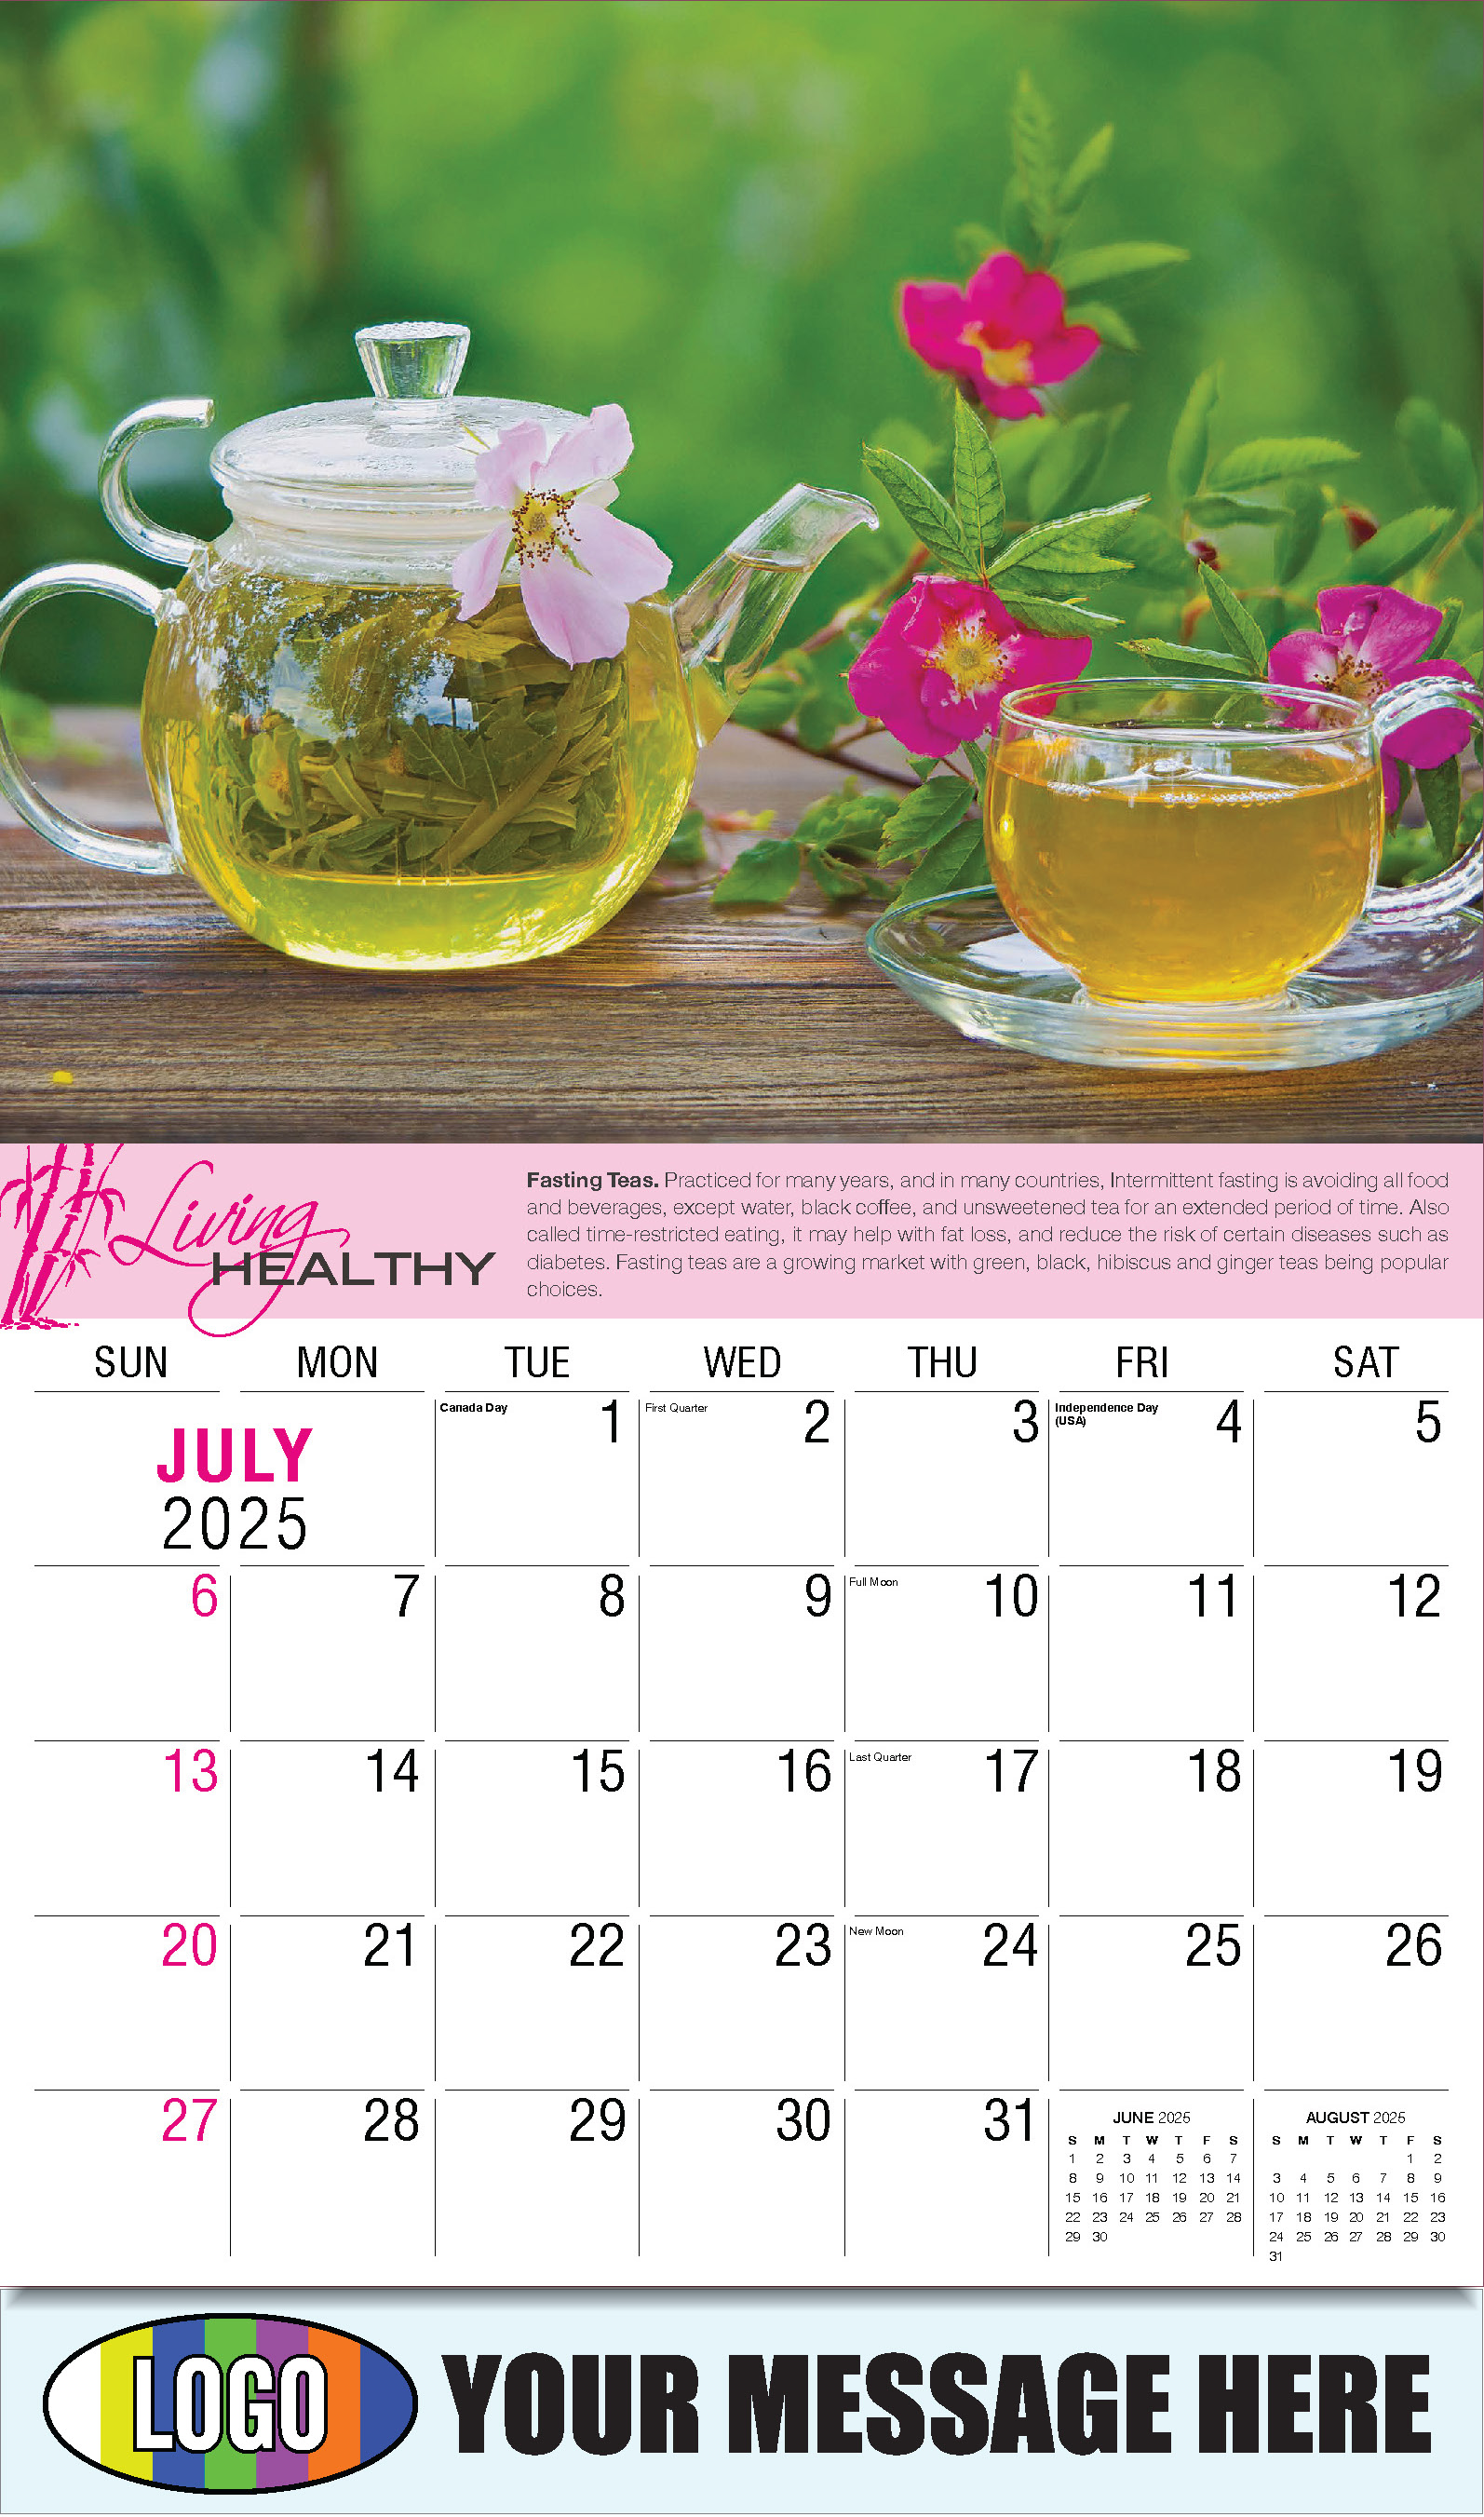 Living Healthy 2025 Business Promotional Calendar - July